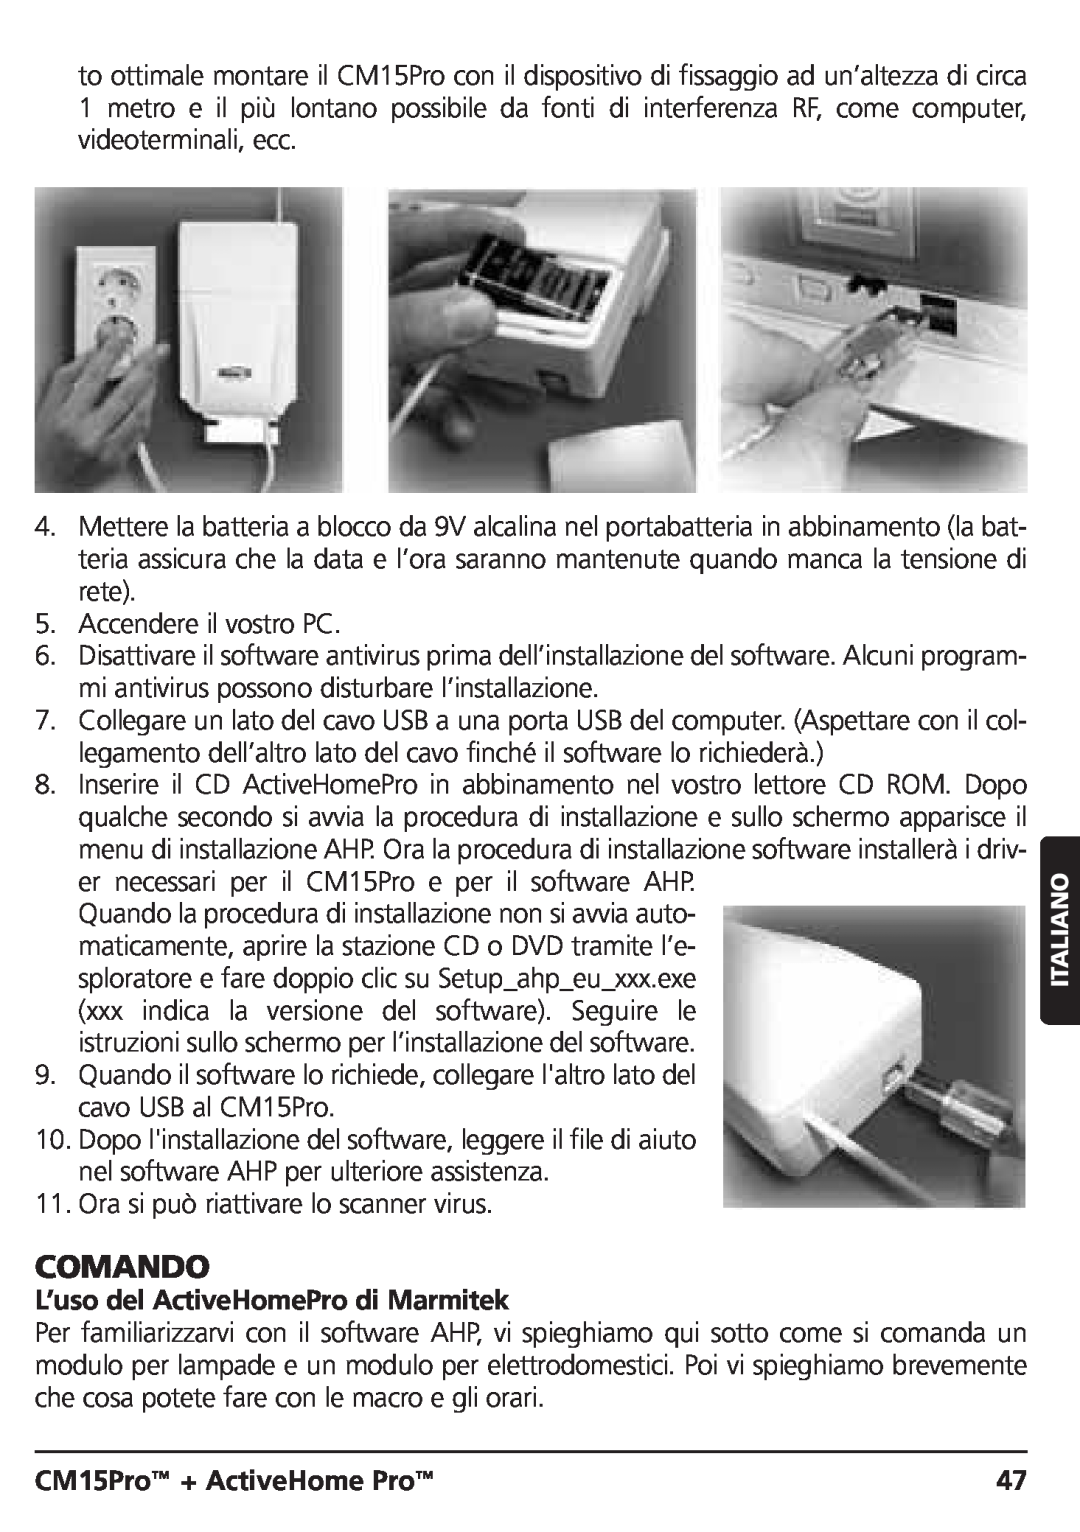 Marmitek CM15PRO manual Comando, L’uso del ActiveHomePro di Marmitek, CM15Pro + ActiveHome Pro 